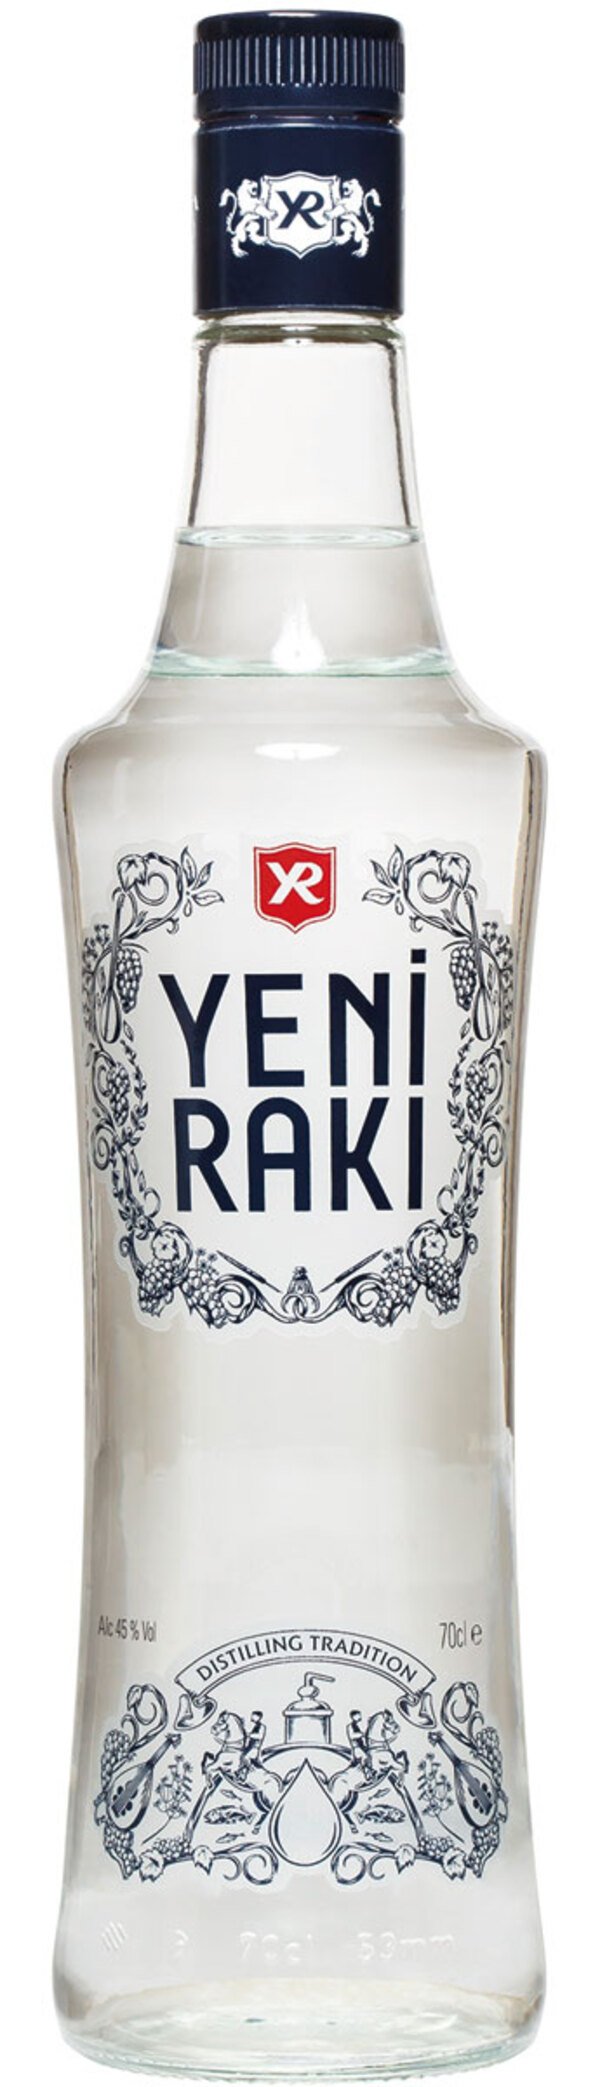 Tekel Istanbul Yeni Raki 0,7 ltr von Edeka24 für 16,56 € ansehen!